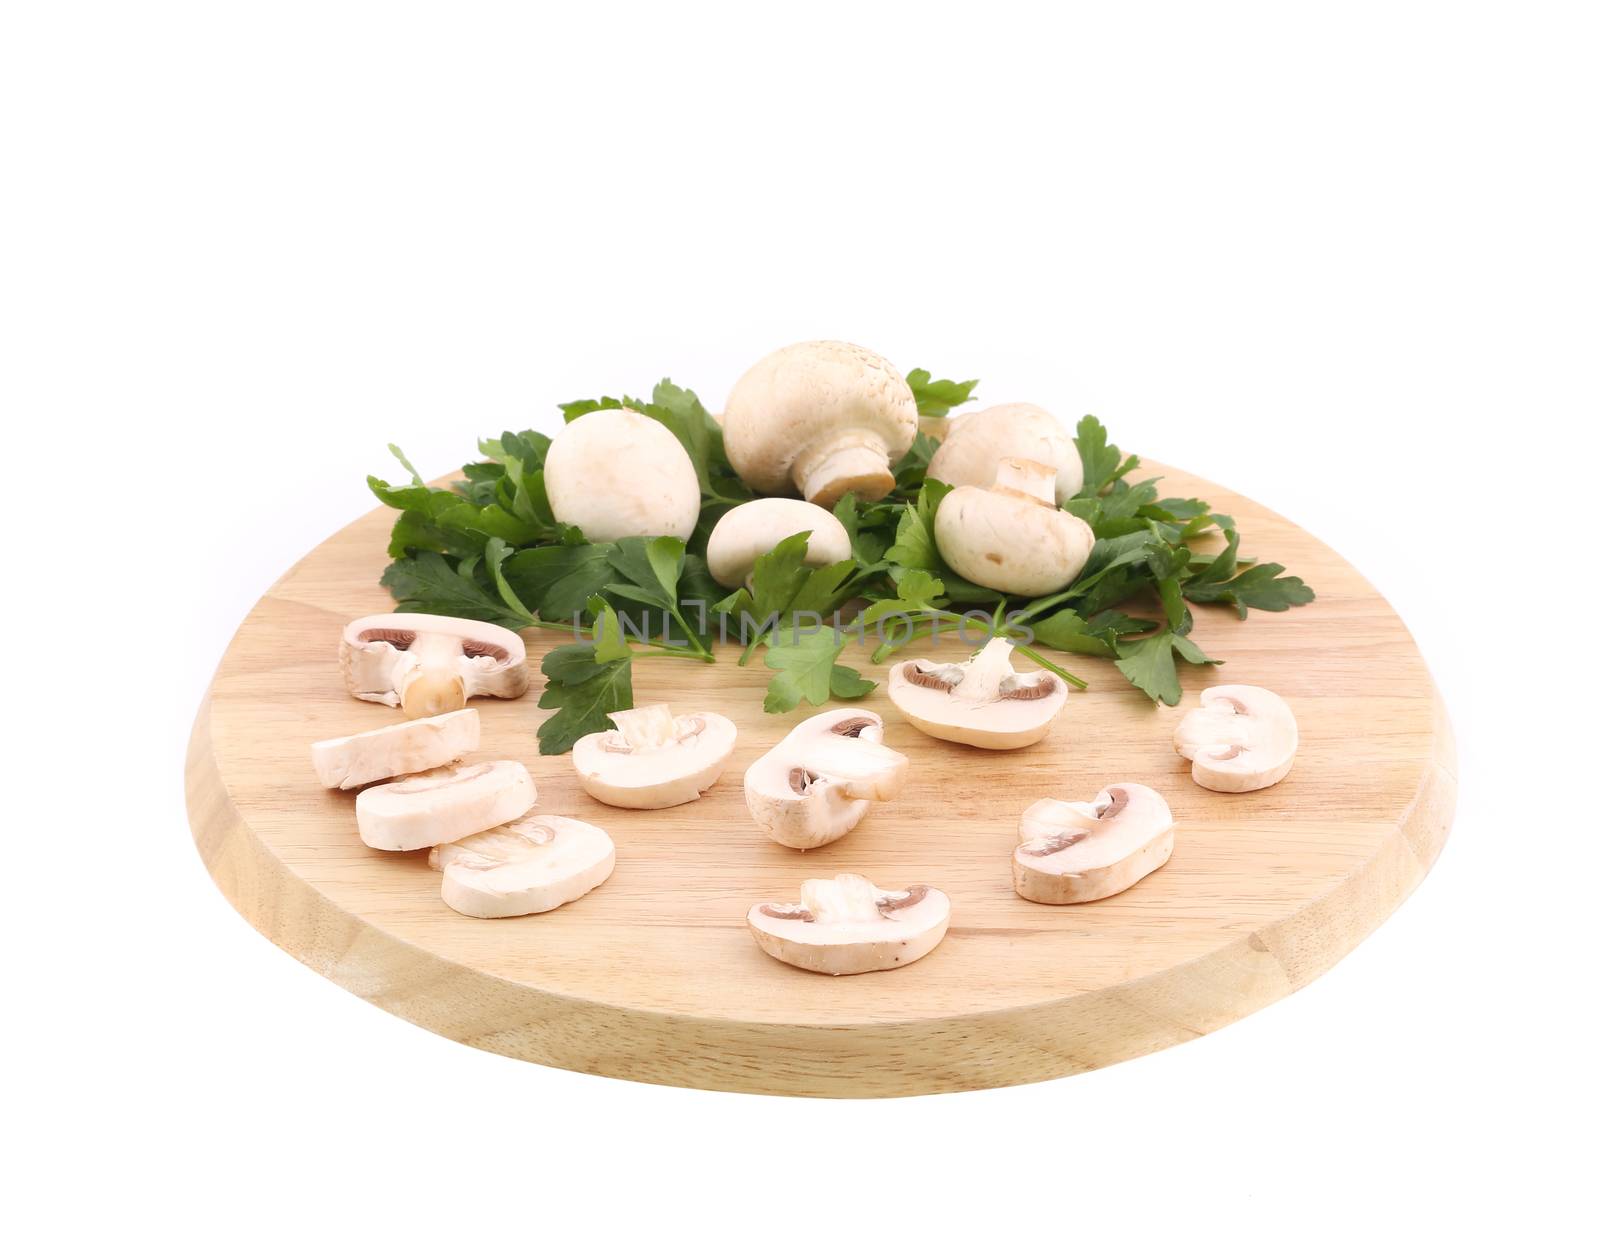 Mushrooms champignon on platter. by indigolotos